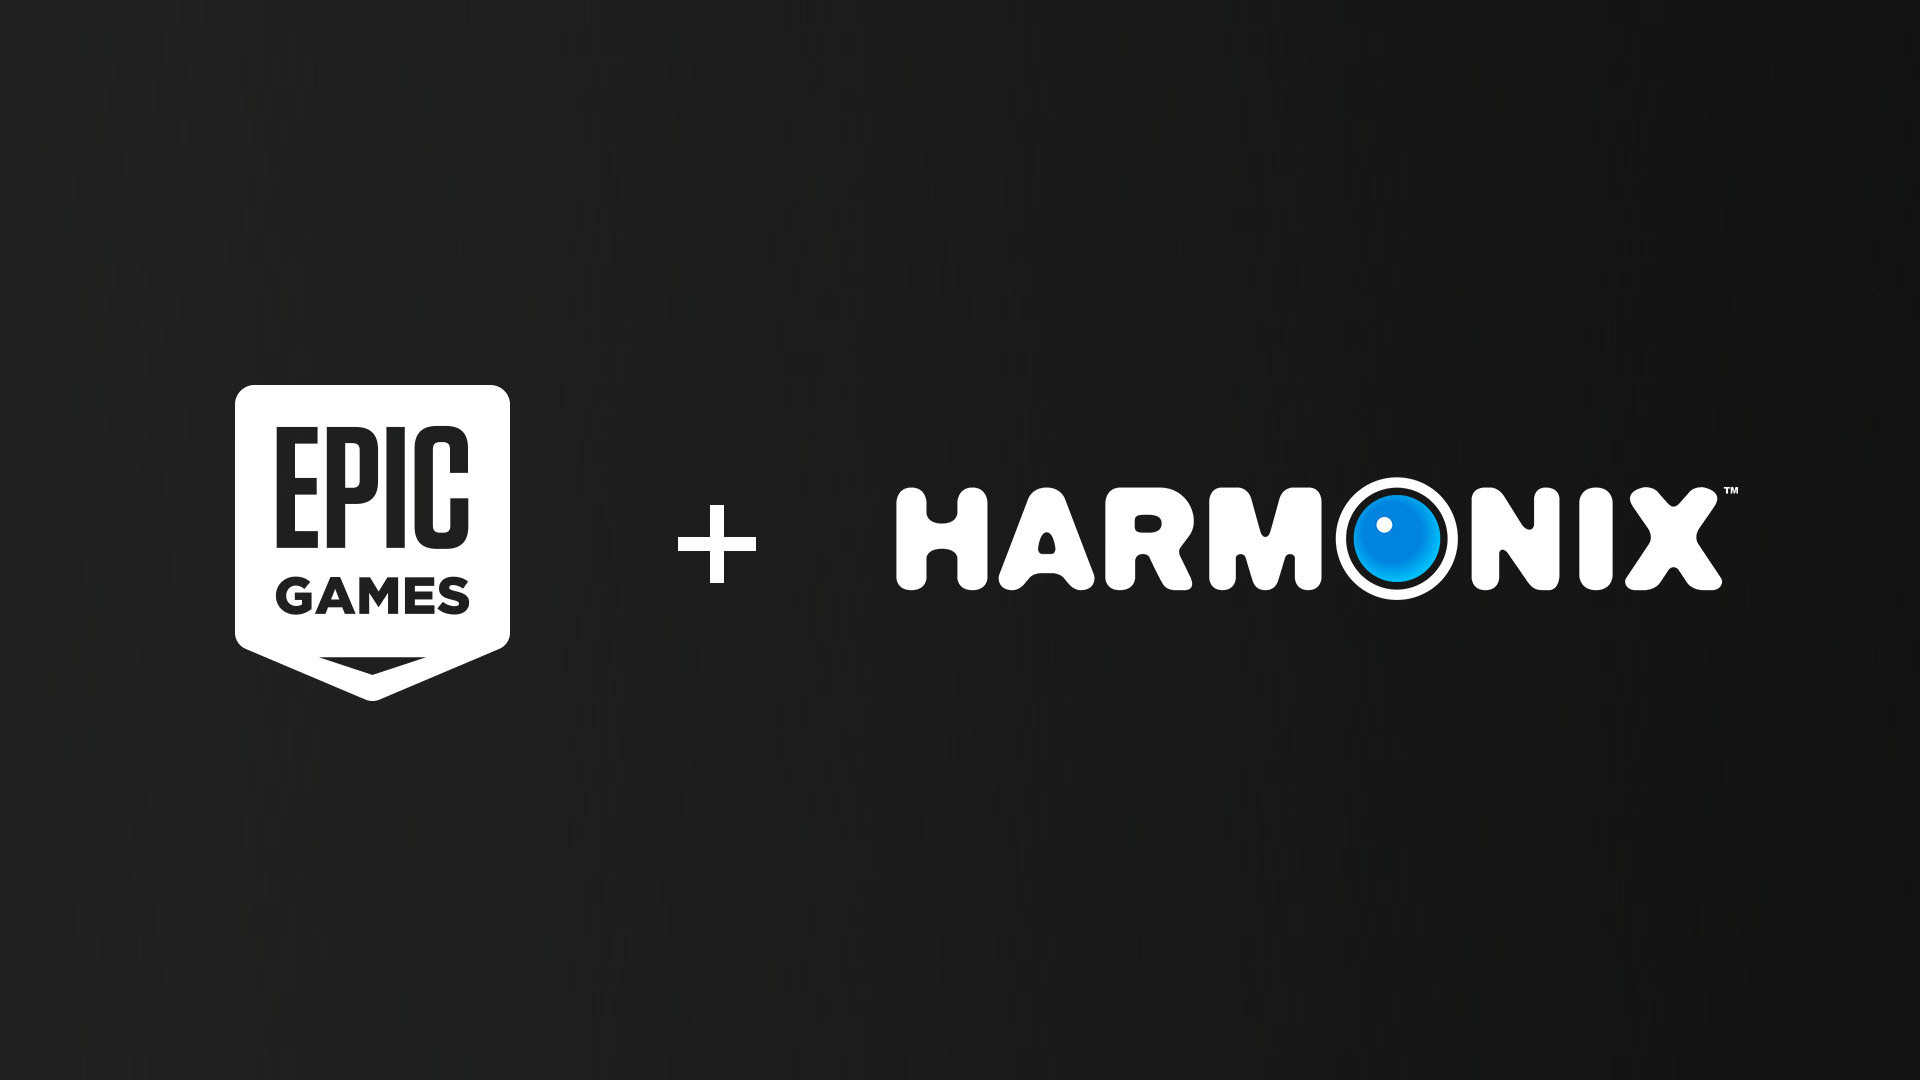 Epic Games + Harmonix logos